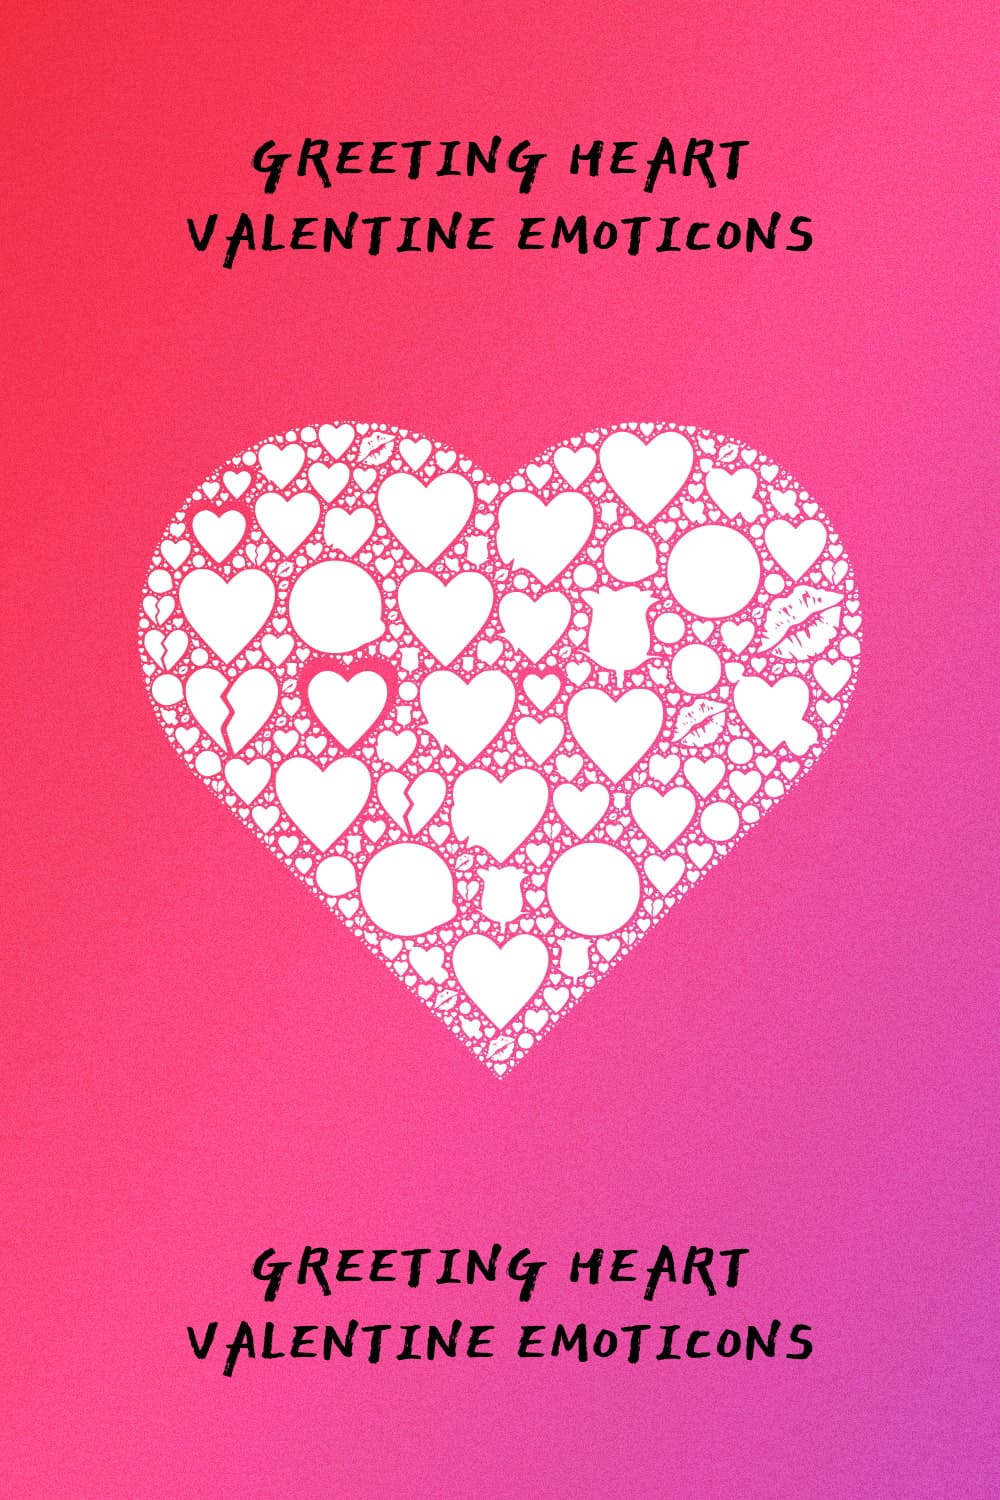 Greeting Heart Valentine Emoticons - Pinterest Image.